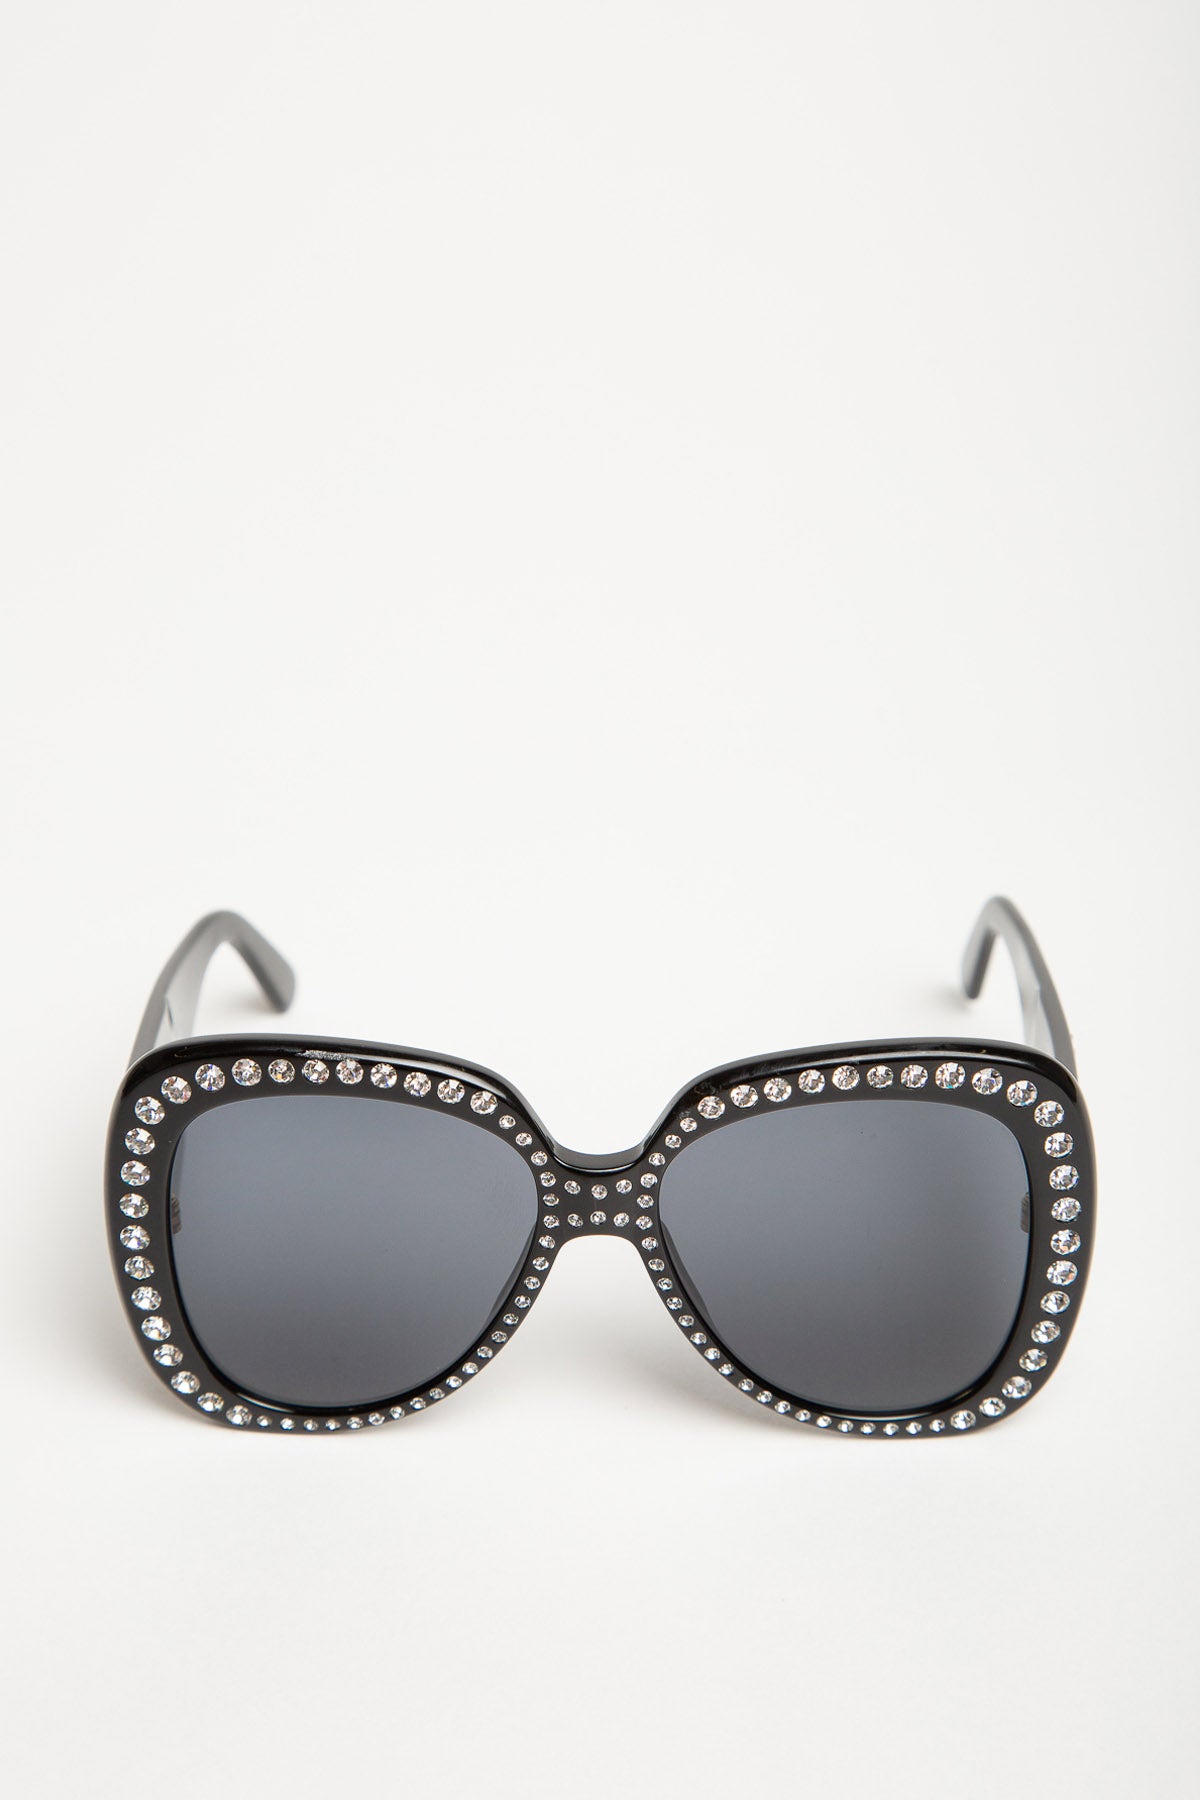 Vintage Chanel | 1995 Oversized Chanel Sunglasses